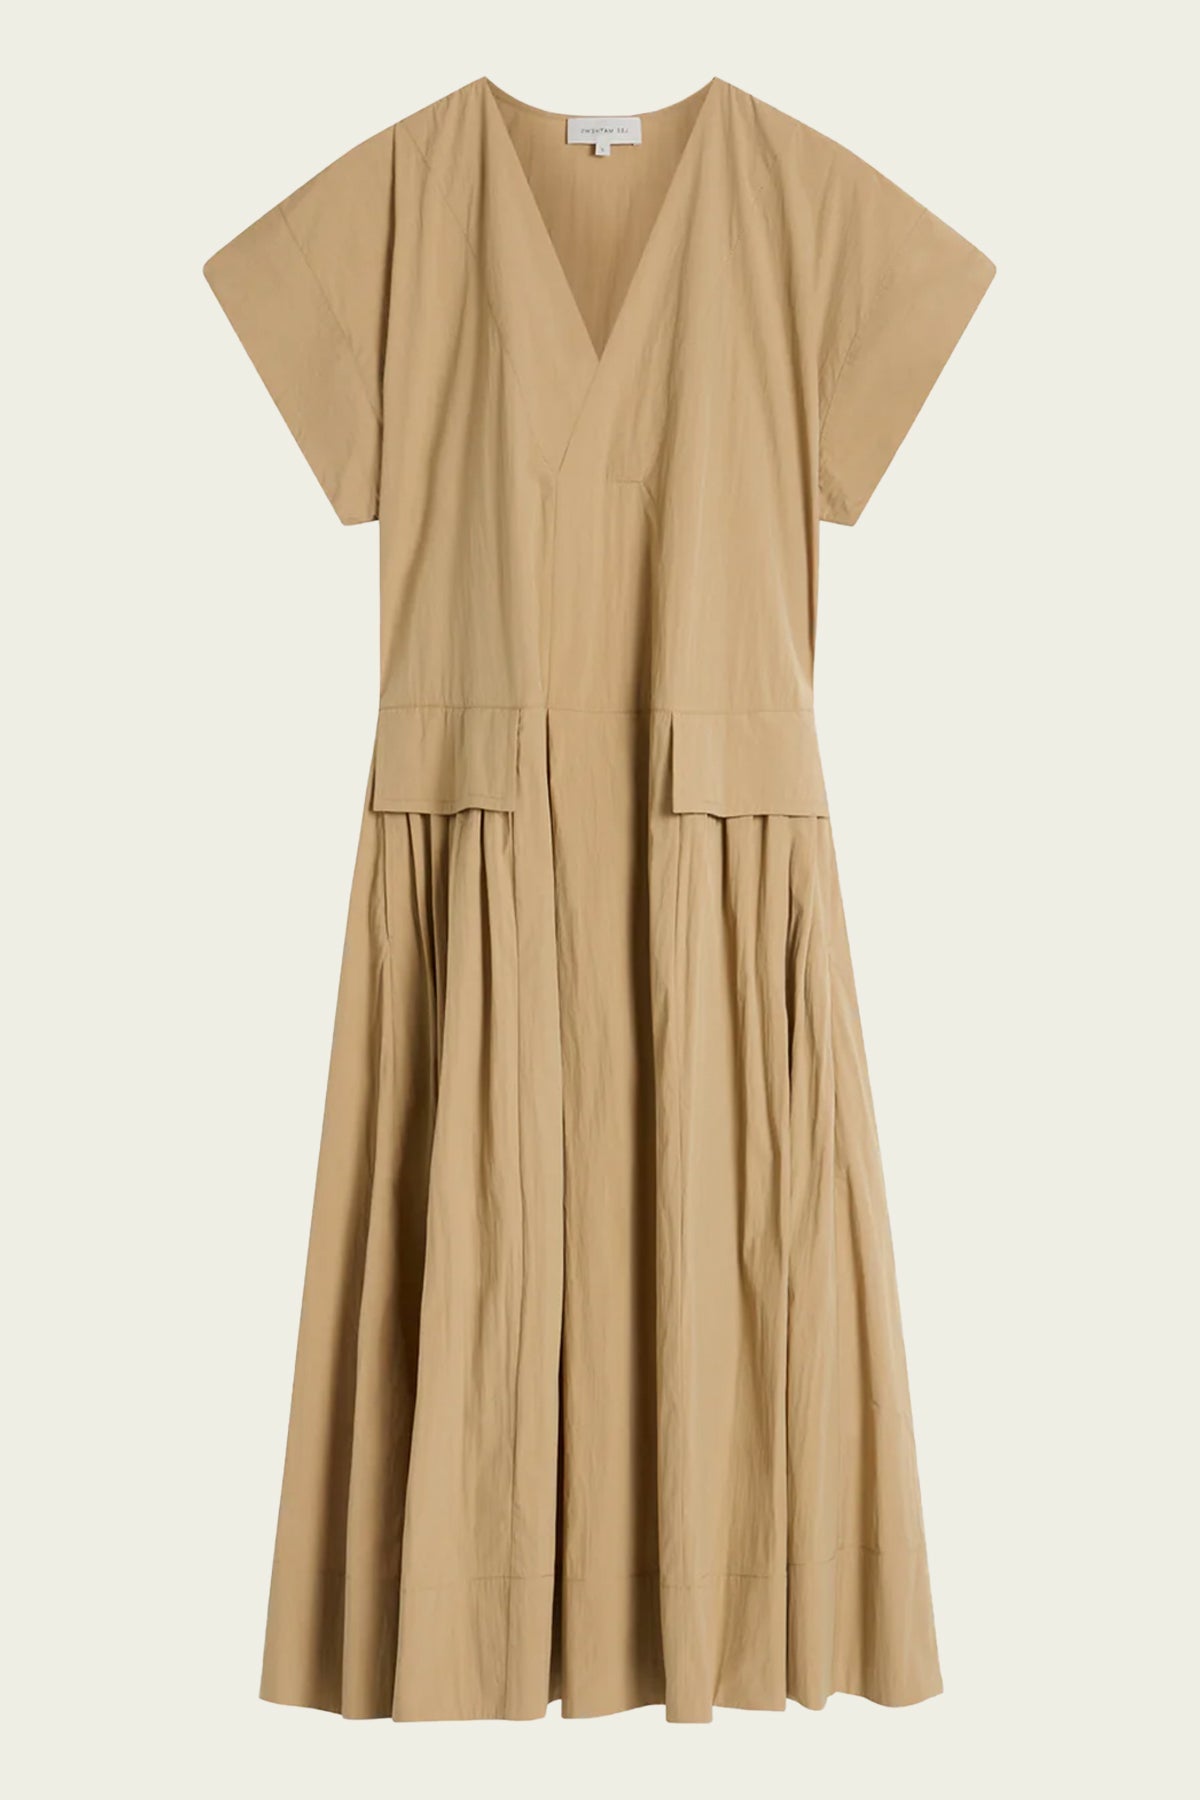 Mina Apron Dress in Caramel - shop-olivia.com